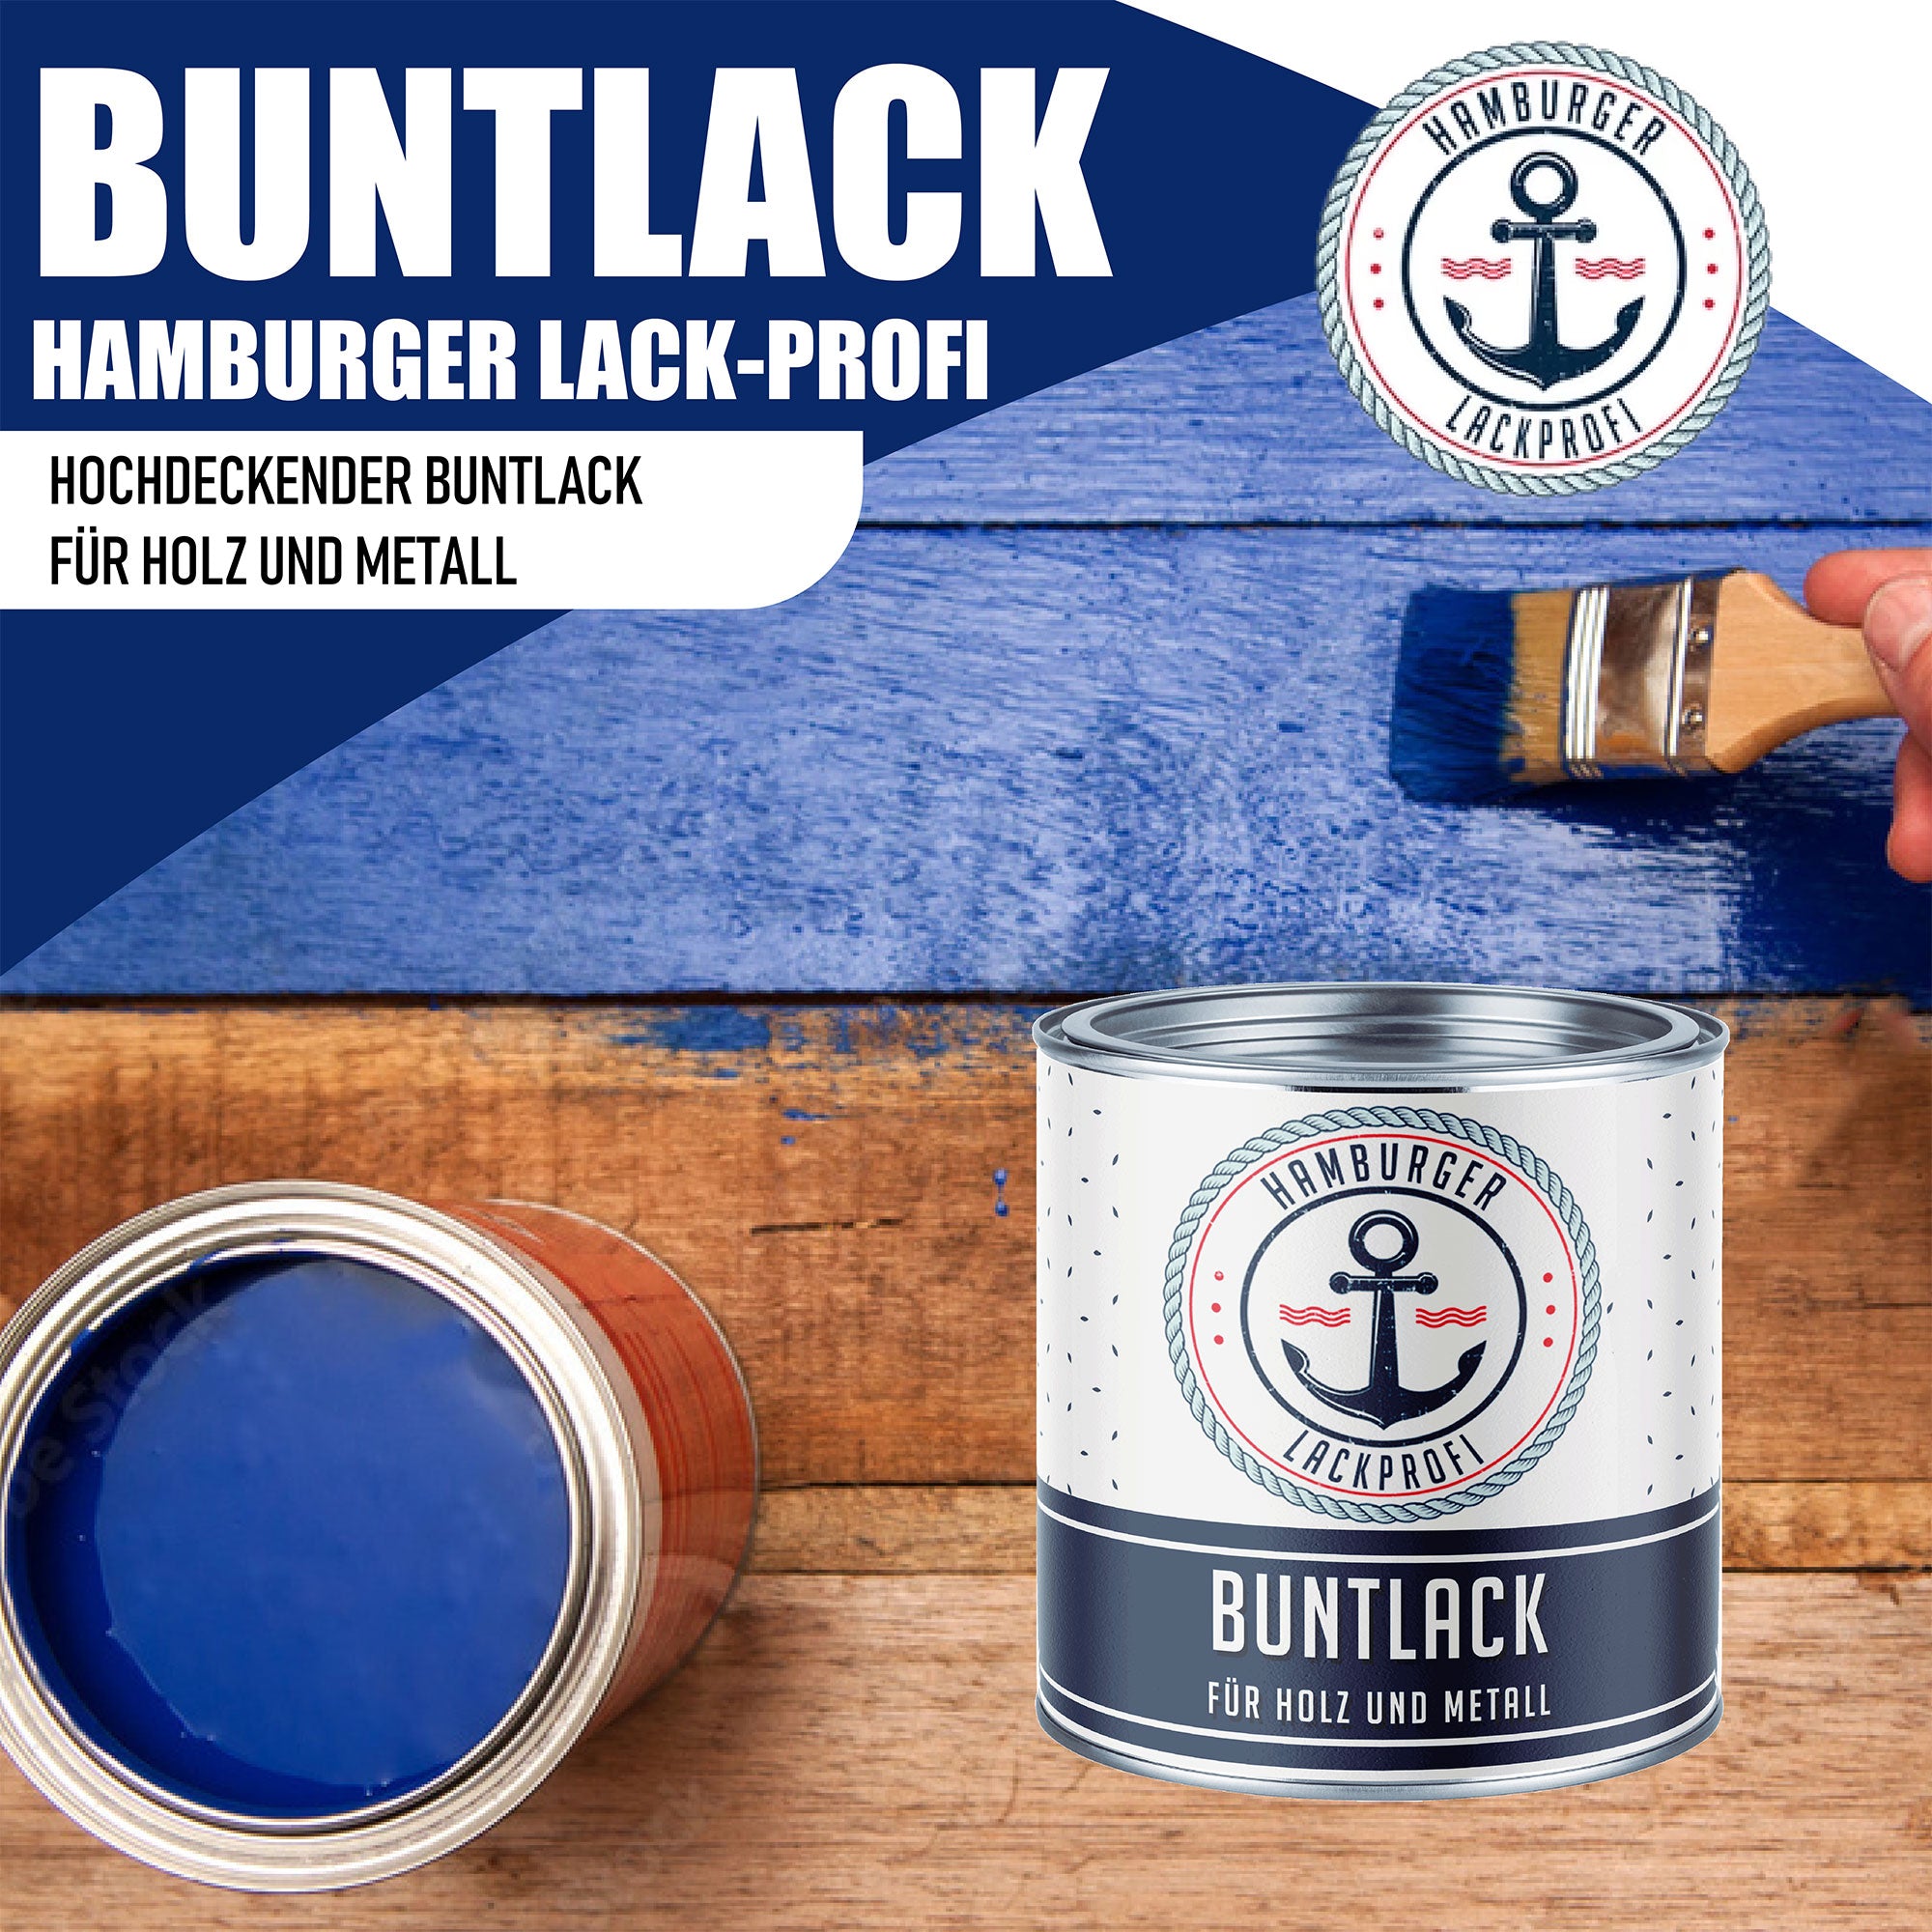 Hamburger Lack-Profi Buntlack Azurblau RAL 5009 - Robuster Kunstharzlack